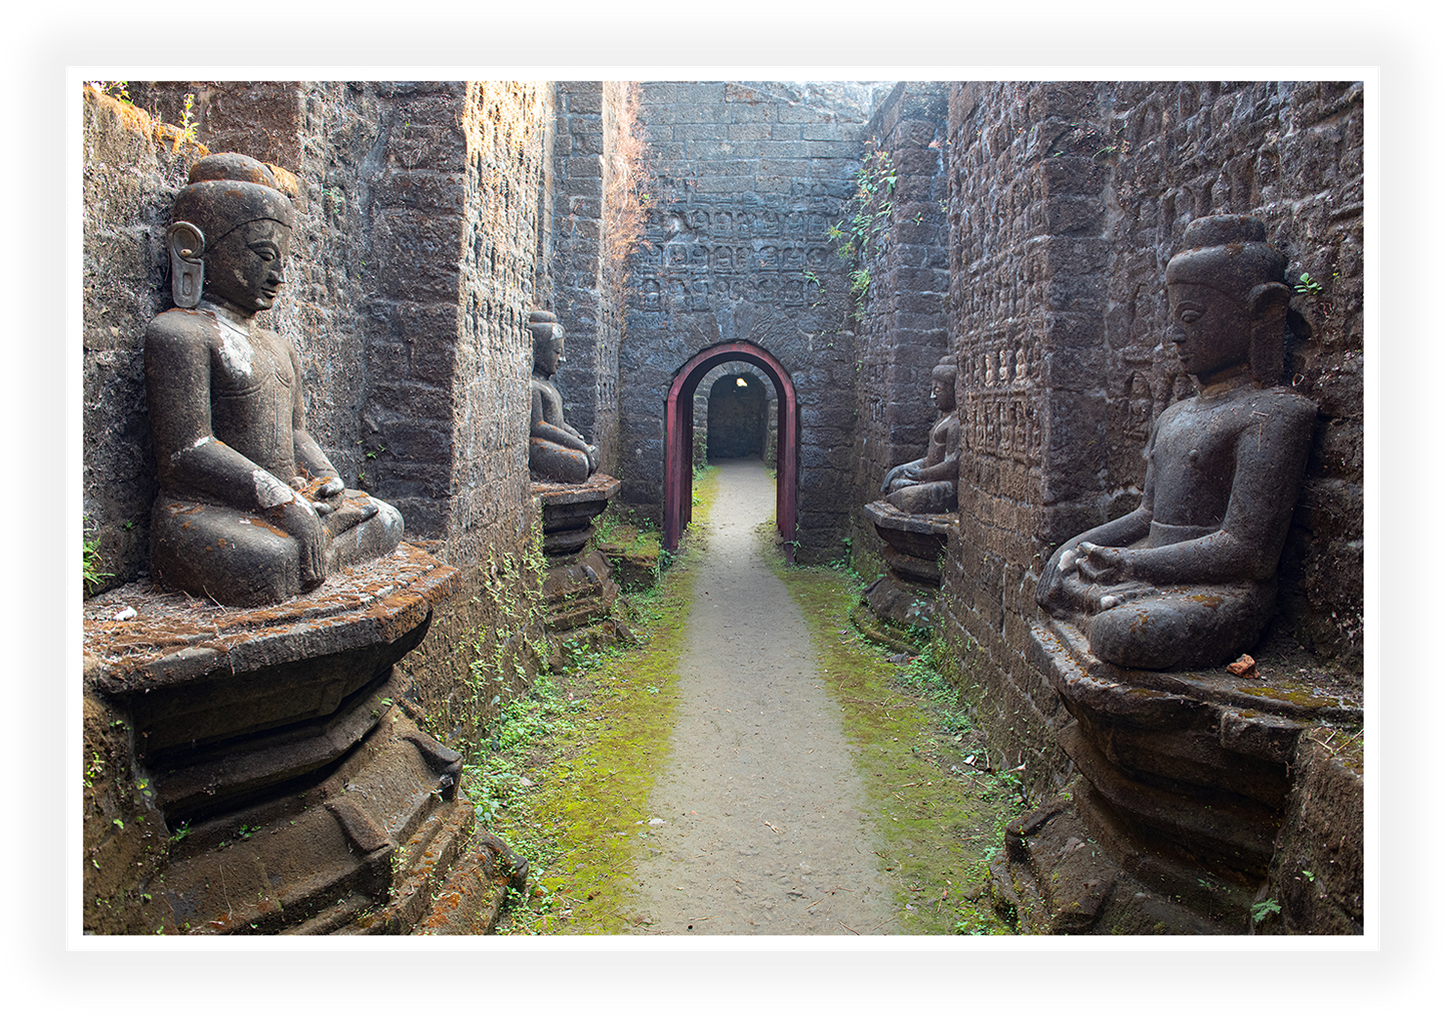 Myanmar - Ancient Guardians: Stone Buddhas in Myanmar's Serene Temple